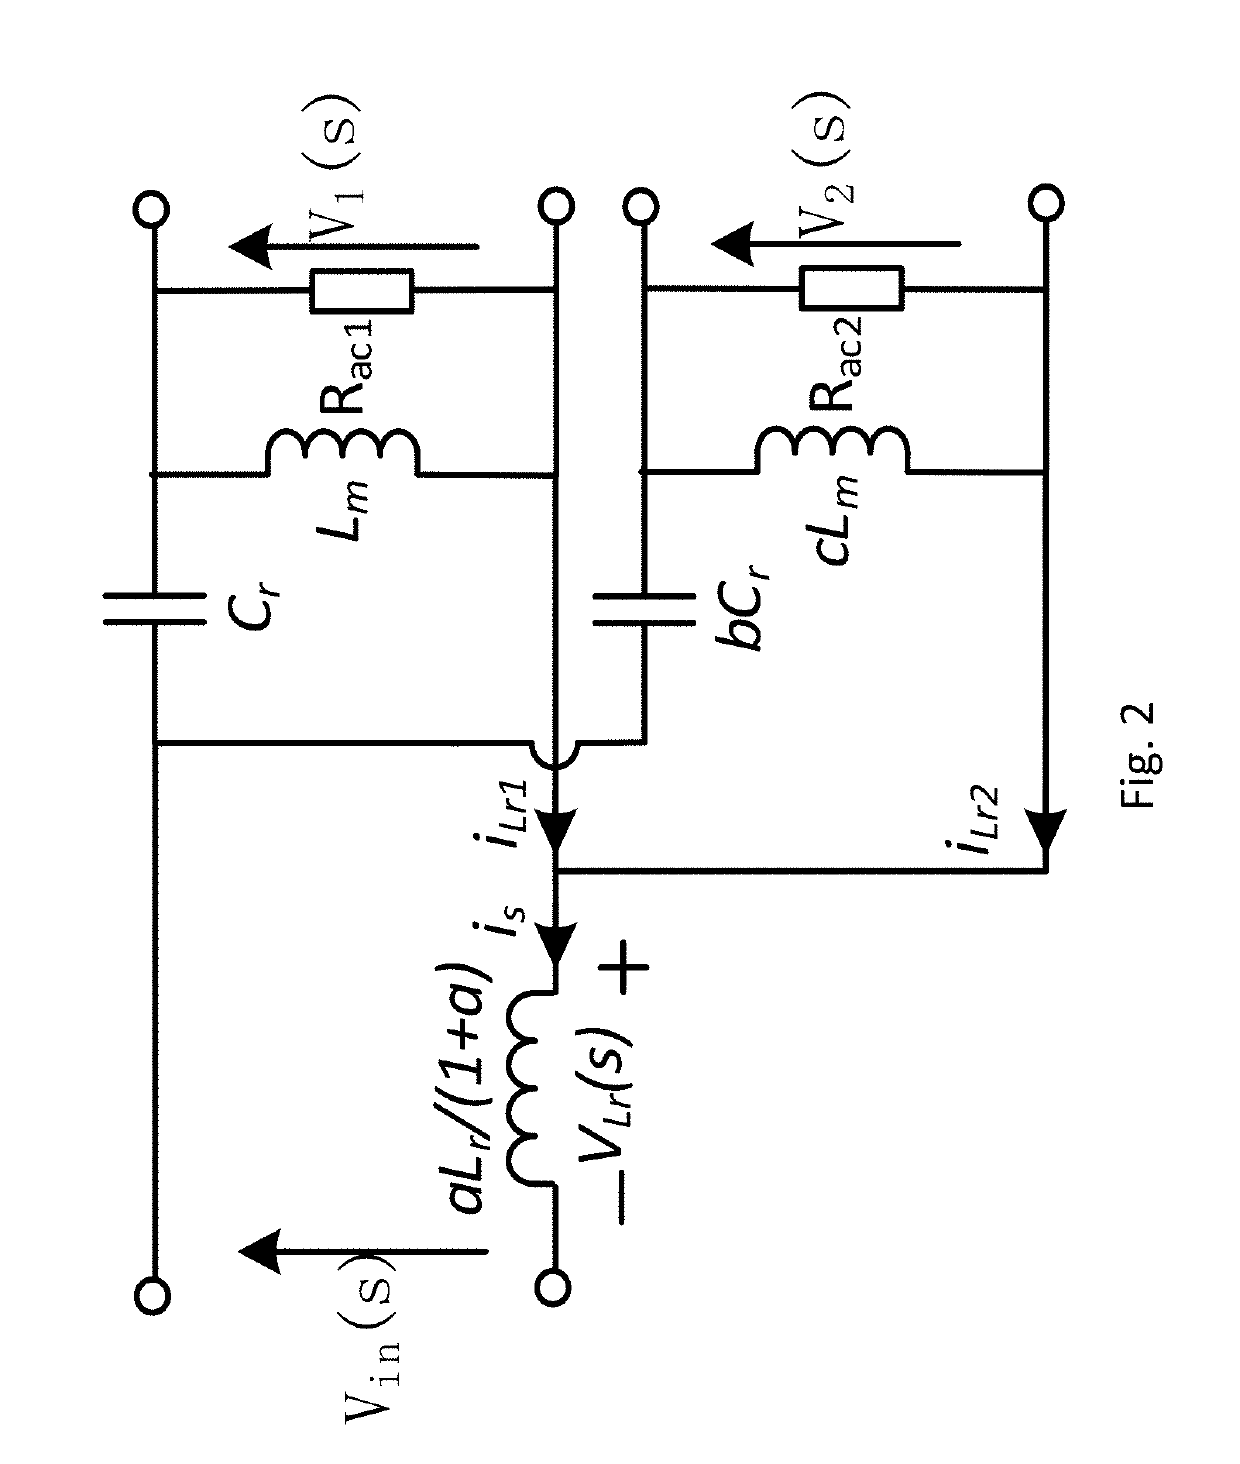 Modular parallel technique for resonant converter